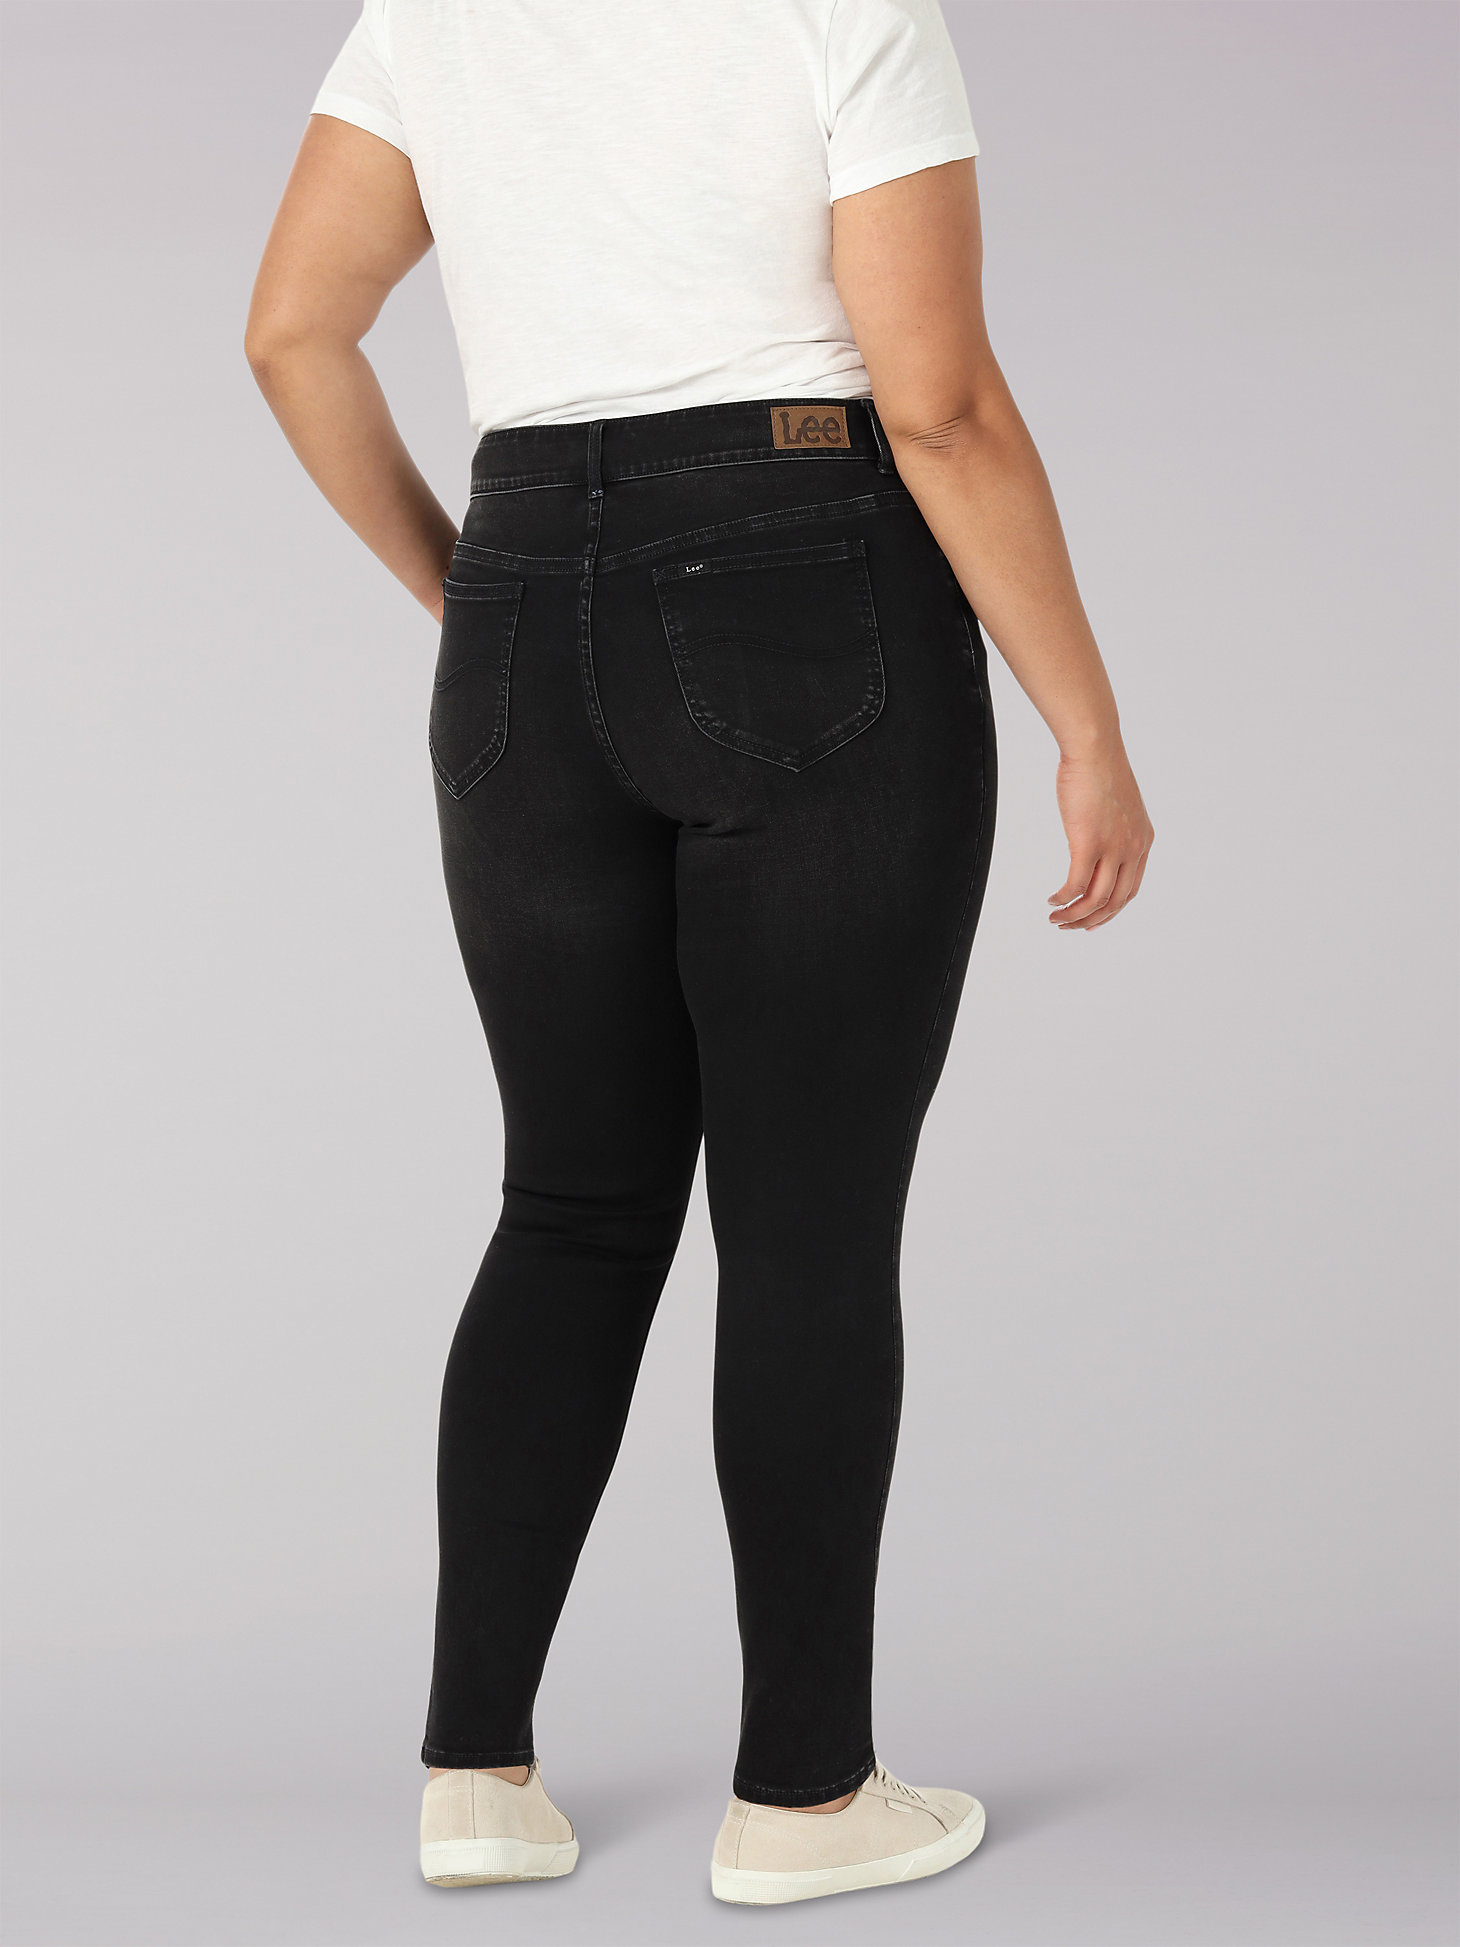 Women's Legendary Slim Fit Skinny Jean (Plus) in Black alternative view 1